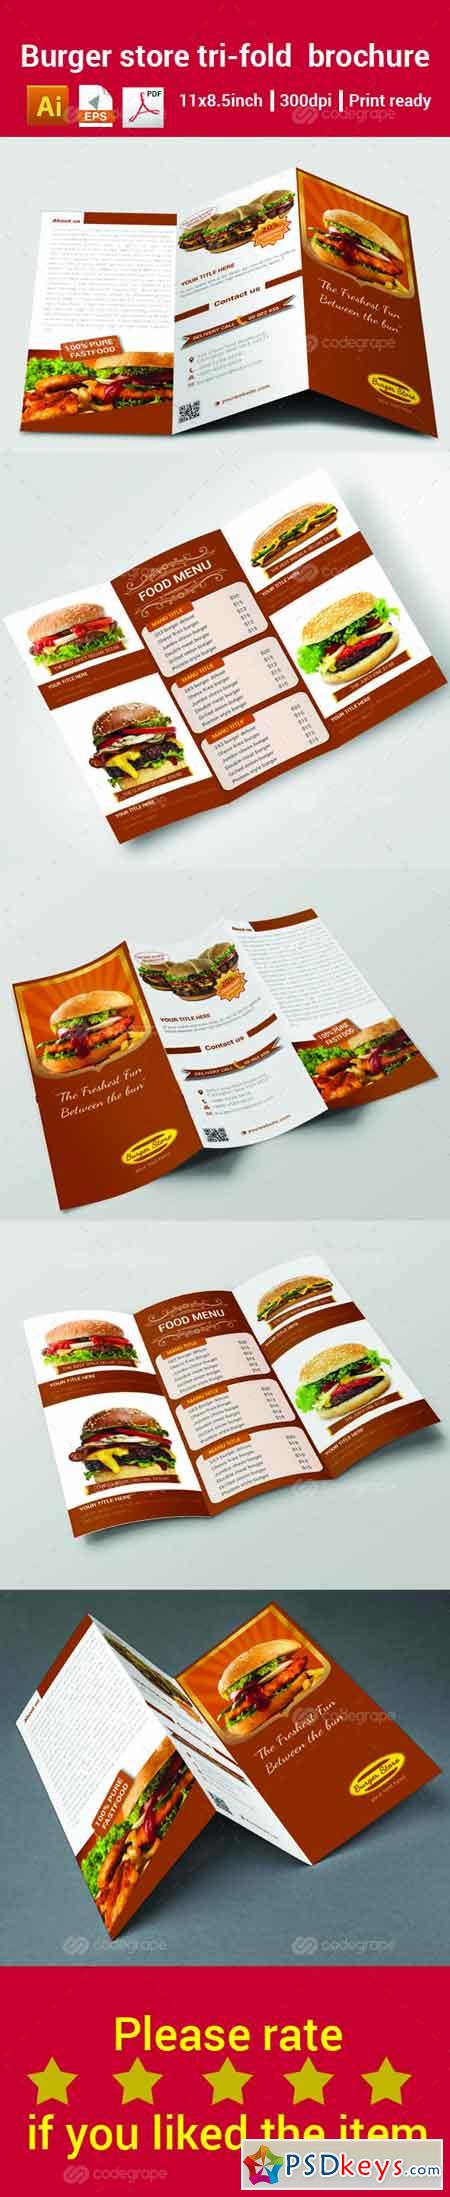 Burger Store Tri-Fold Brochure 6298